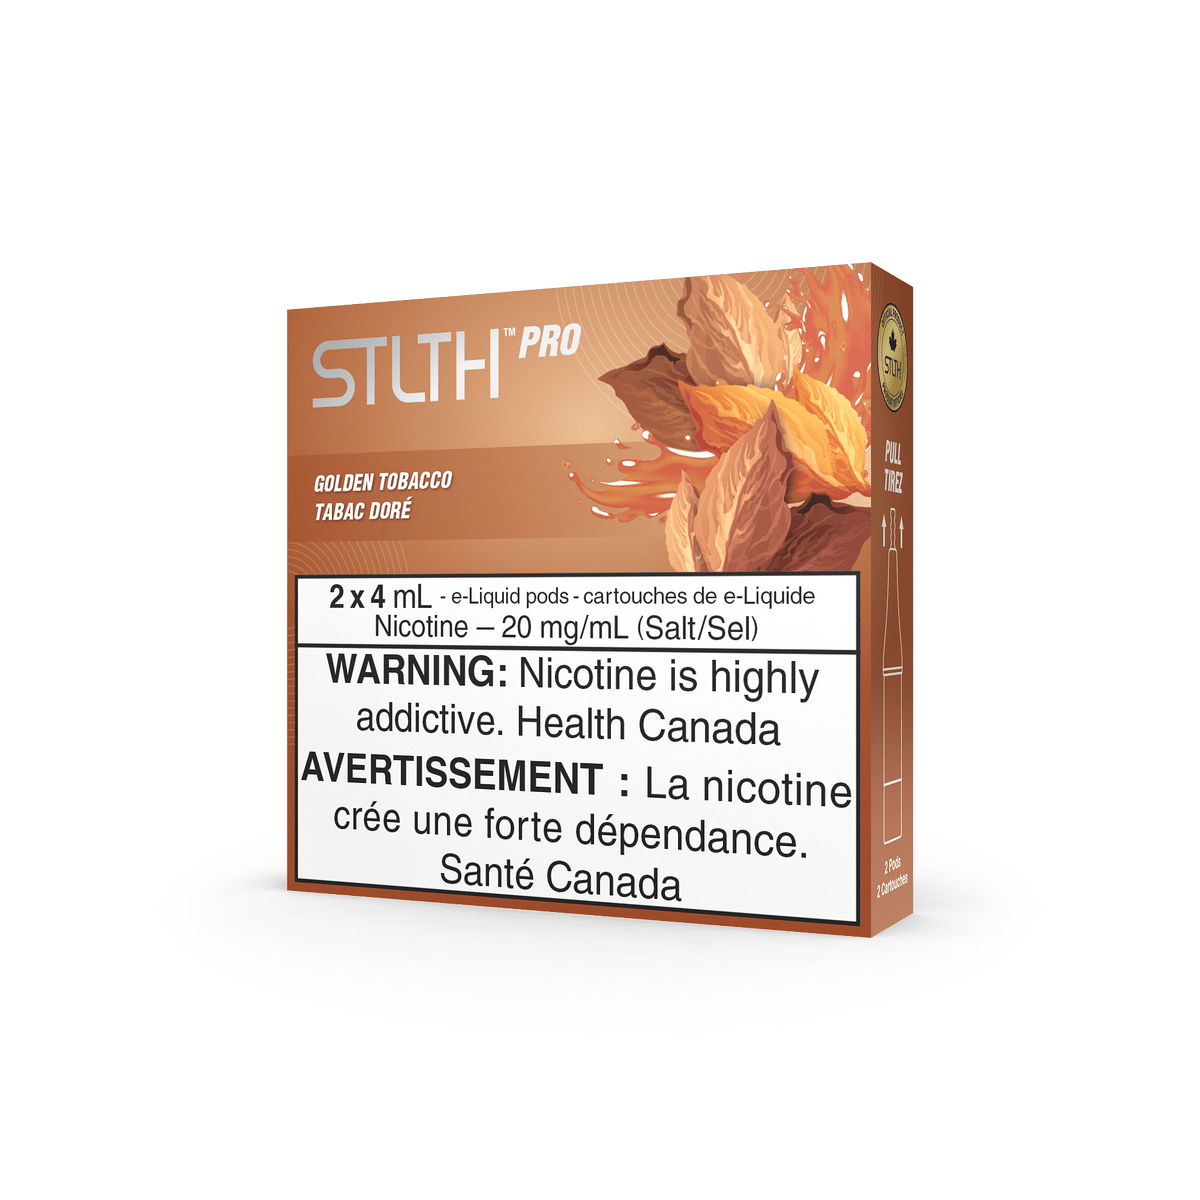 STLTH Pro - Golden Tobacco Vape Pod available on Canada online vape shop